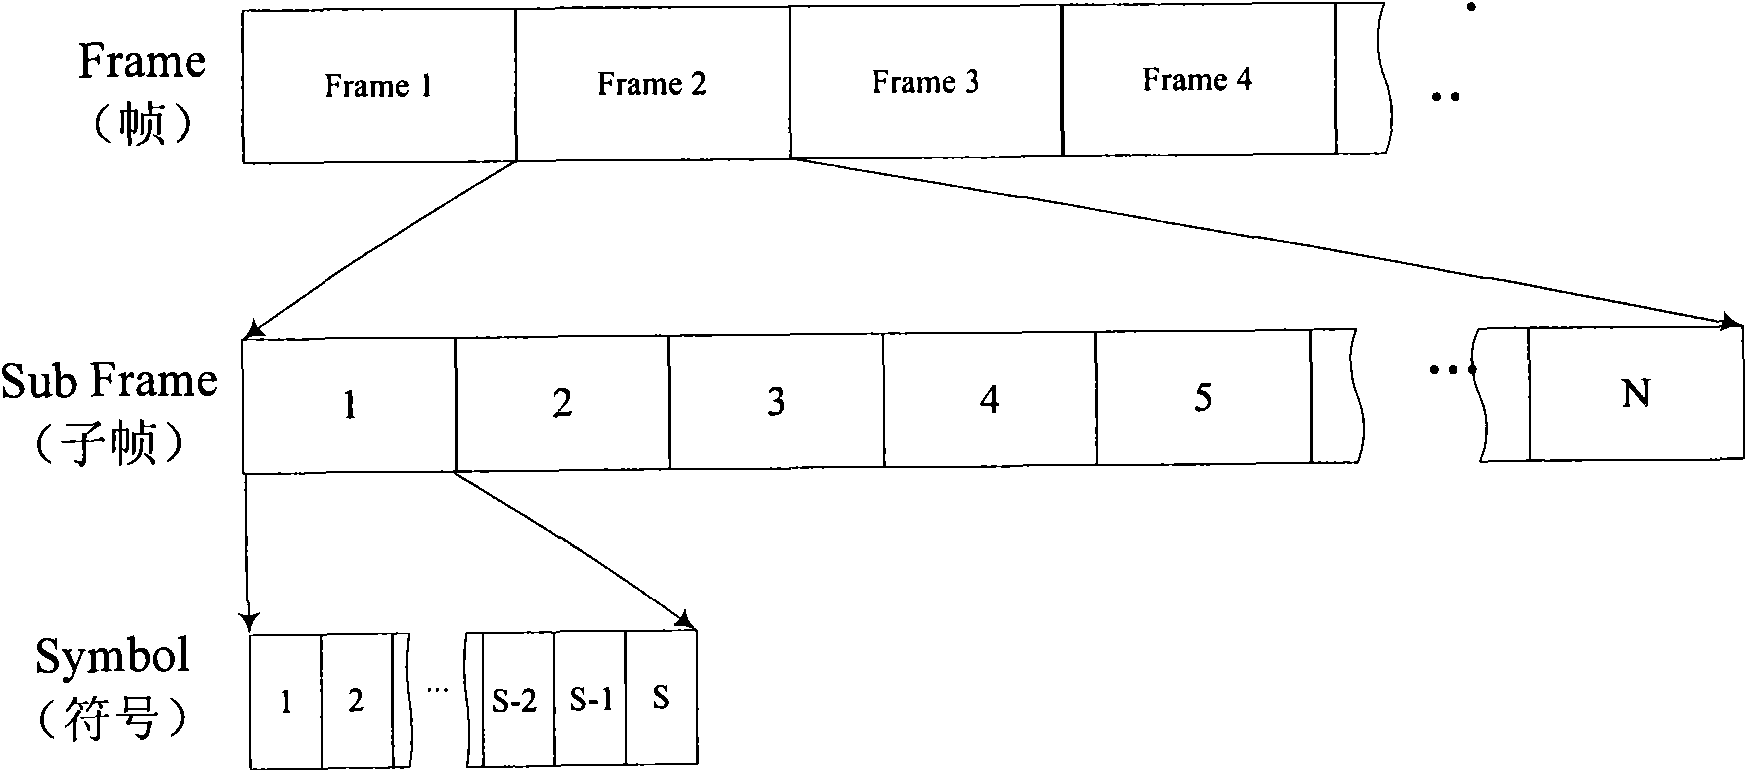 Control channel design method